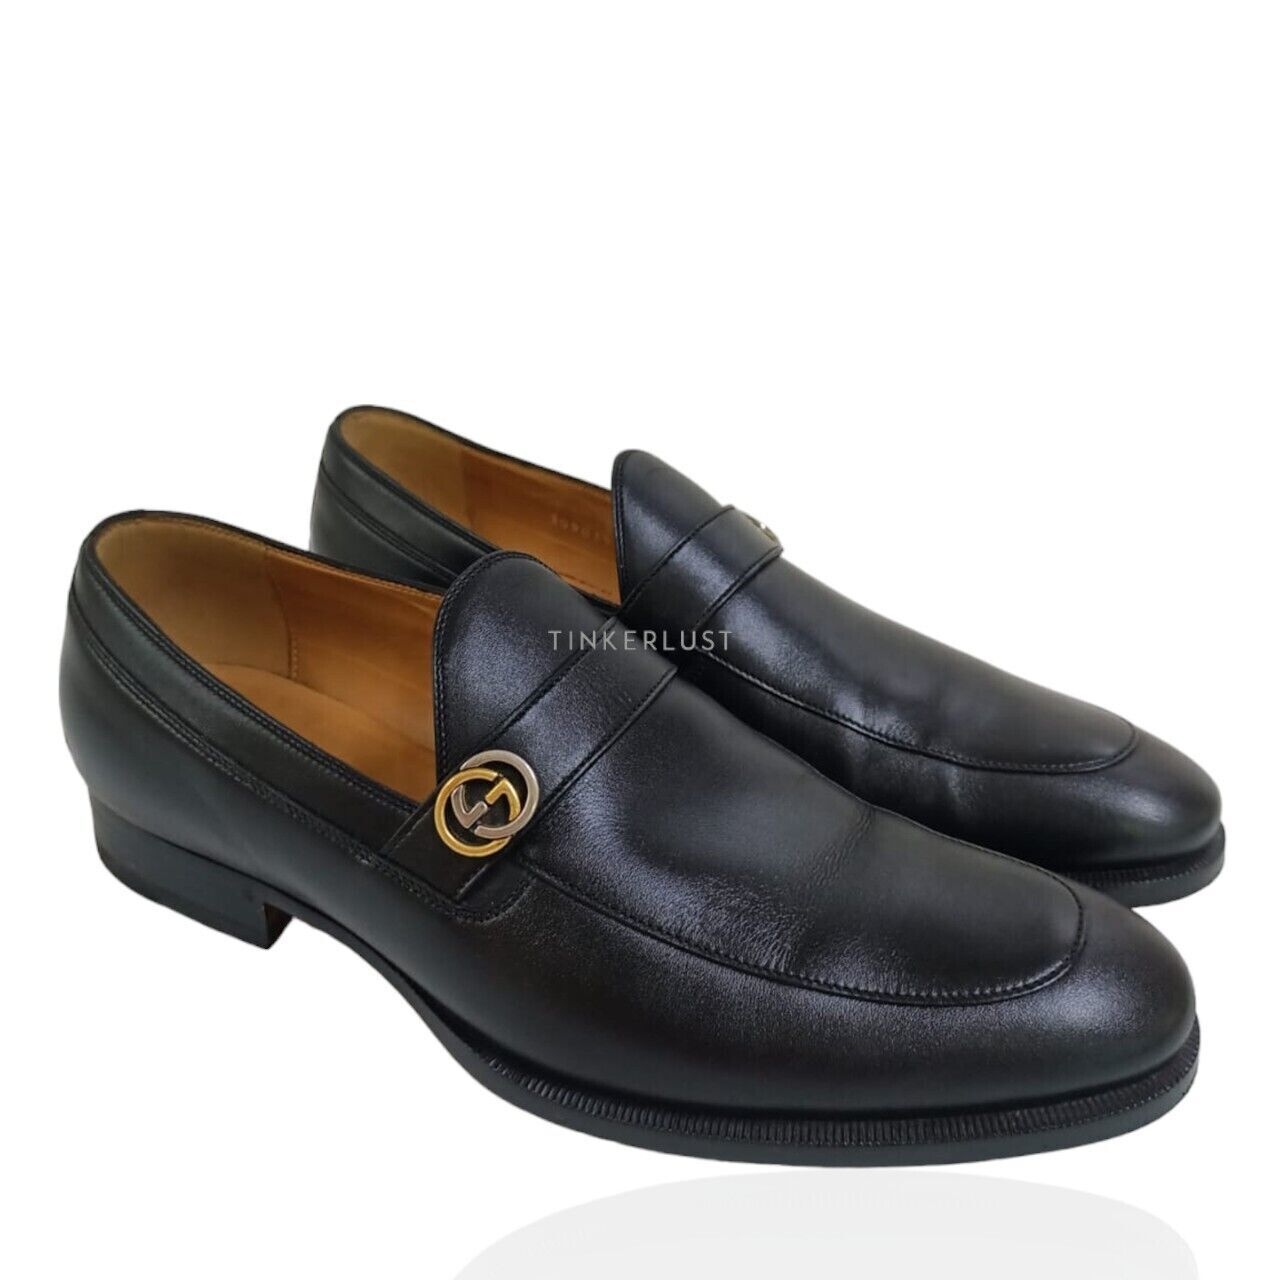 Gucci Men's Interlocking GG Logo Black Leather Loafers